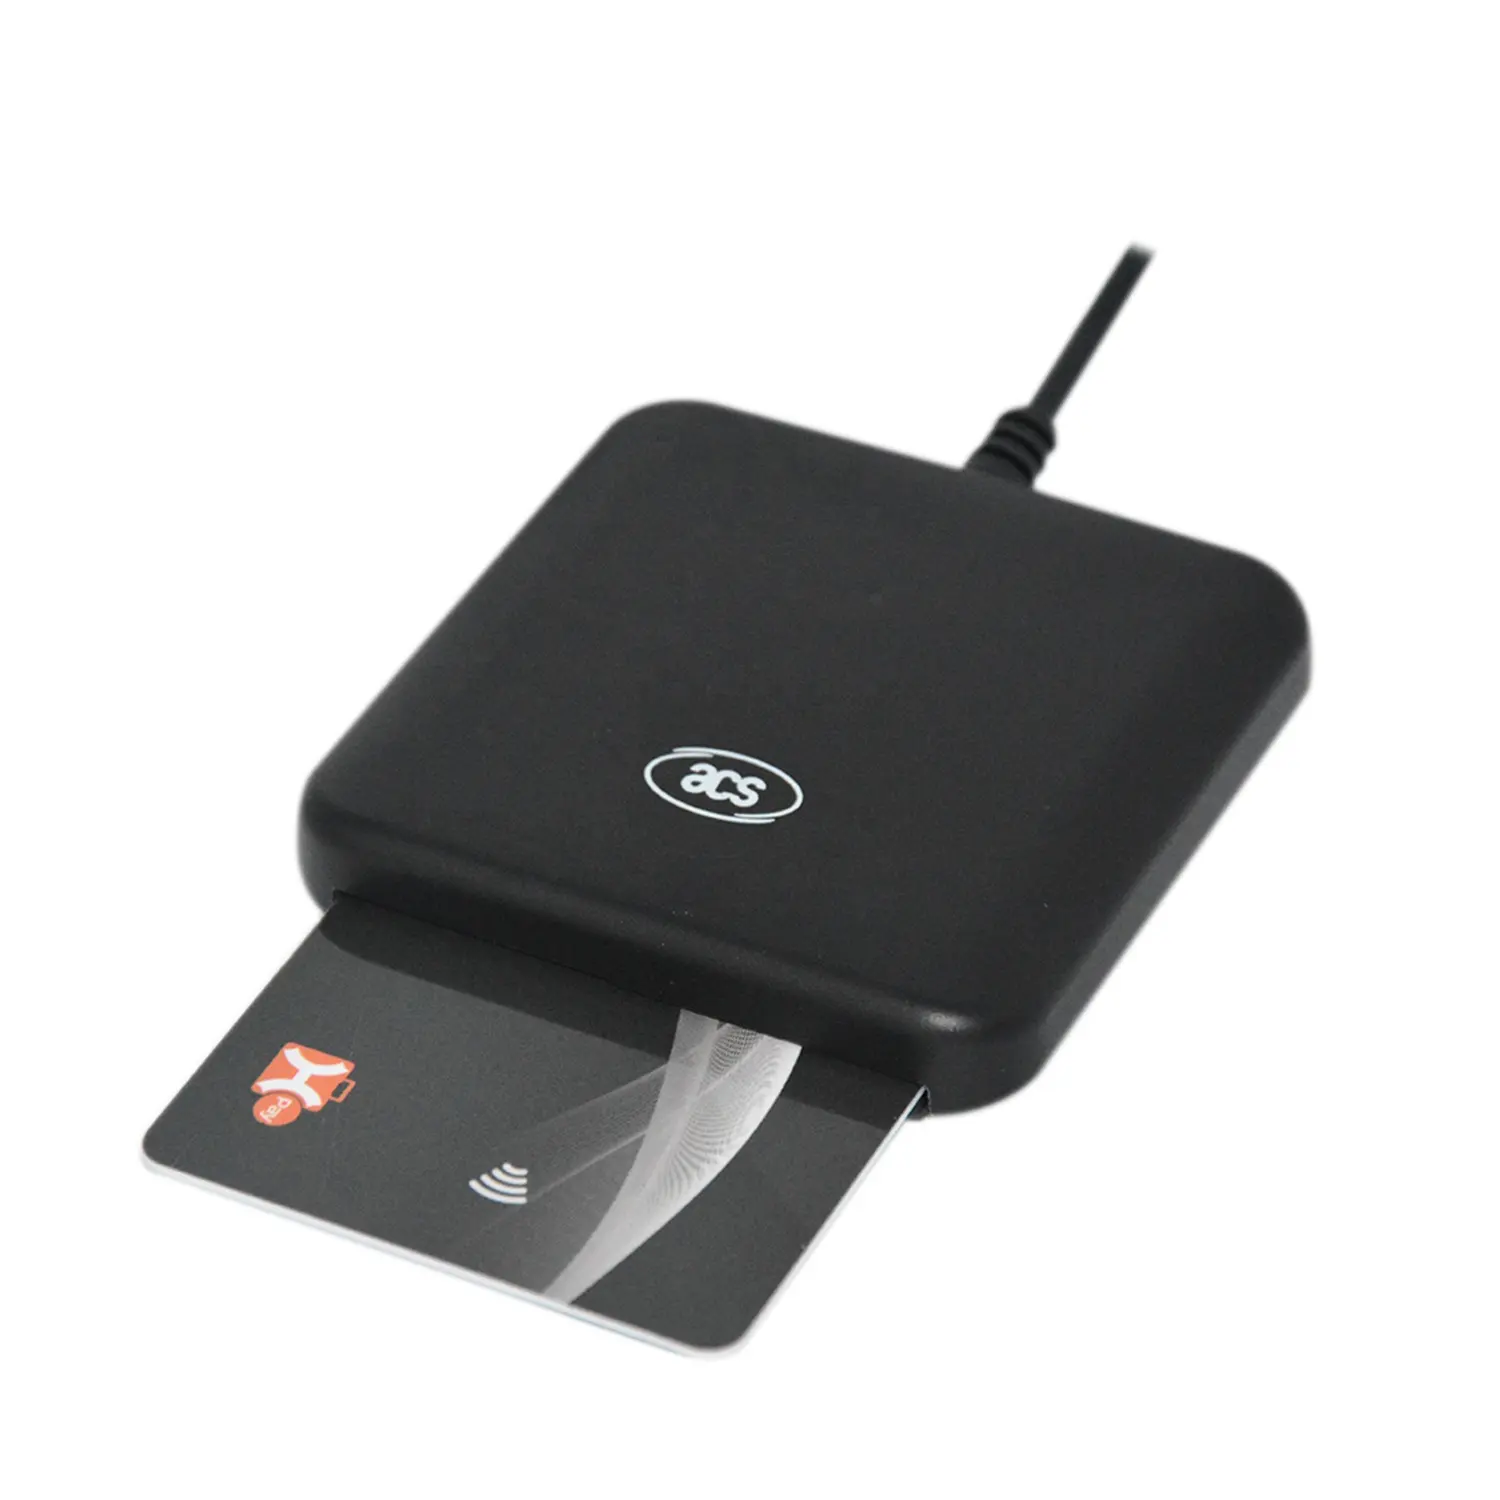 PC/SC iletişim IC USB akıllı çip kart okuyucu ACR39U-I1